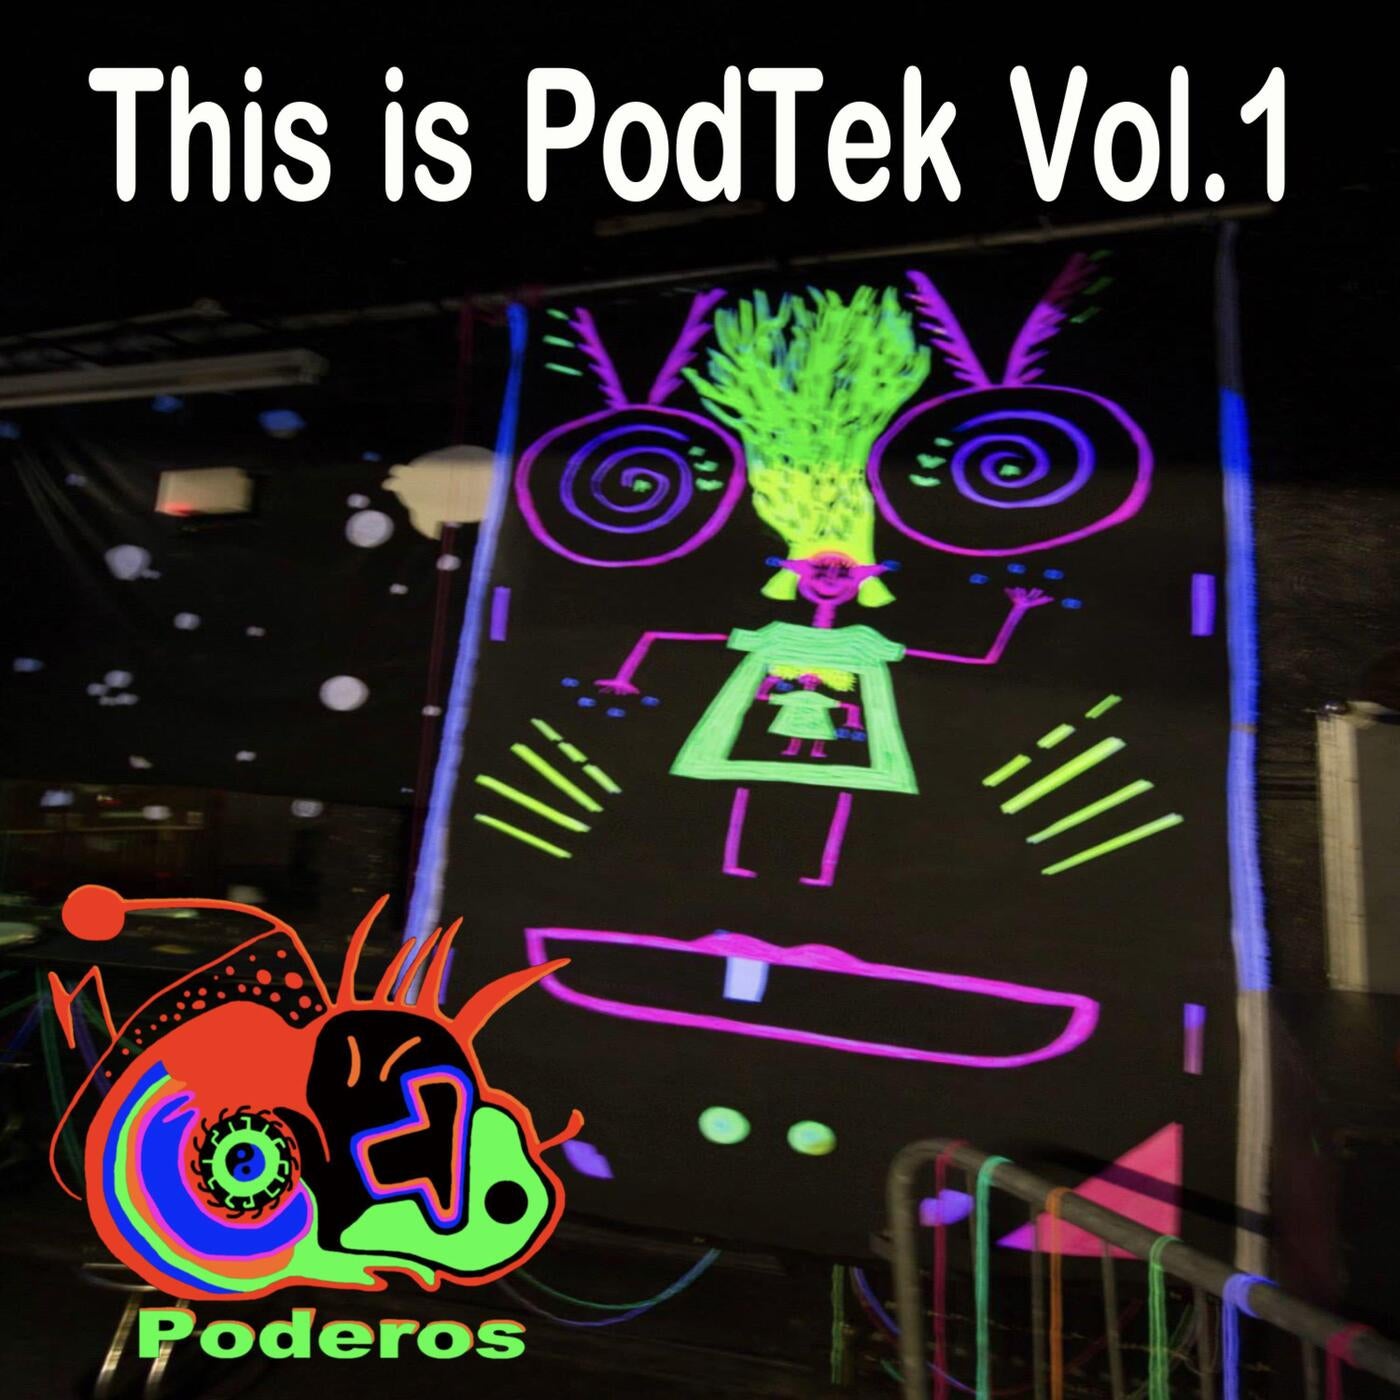 This is PodTek, Vol. 1